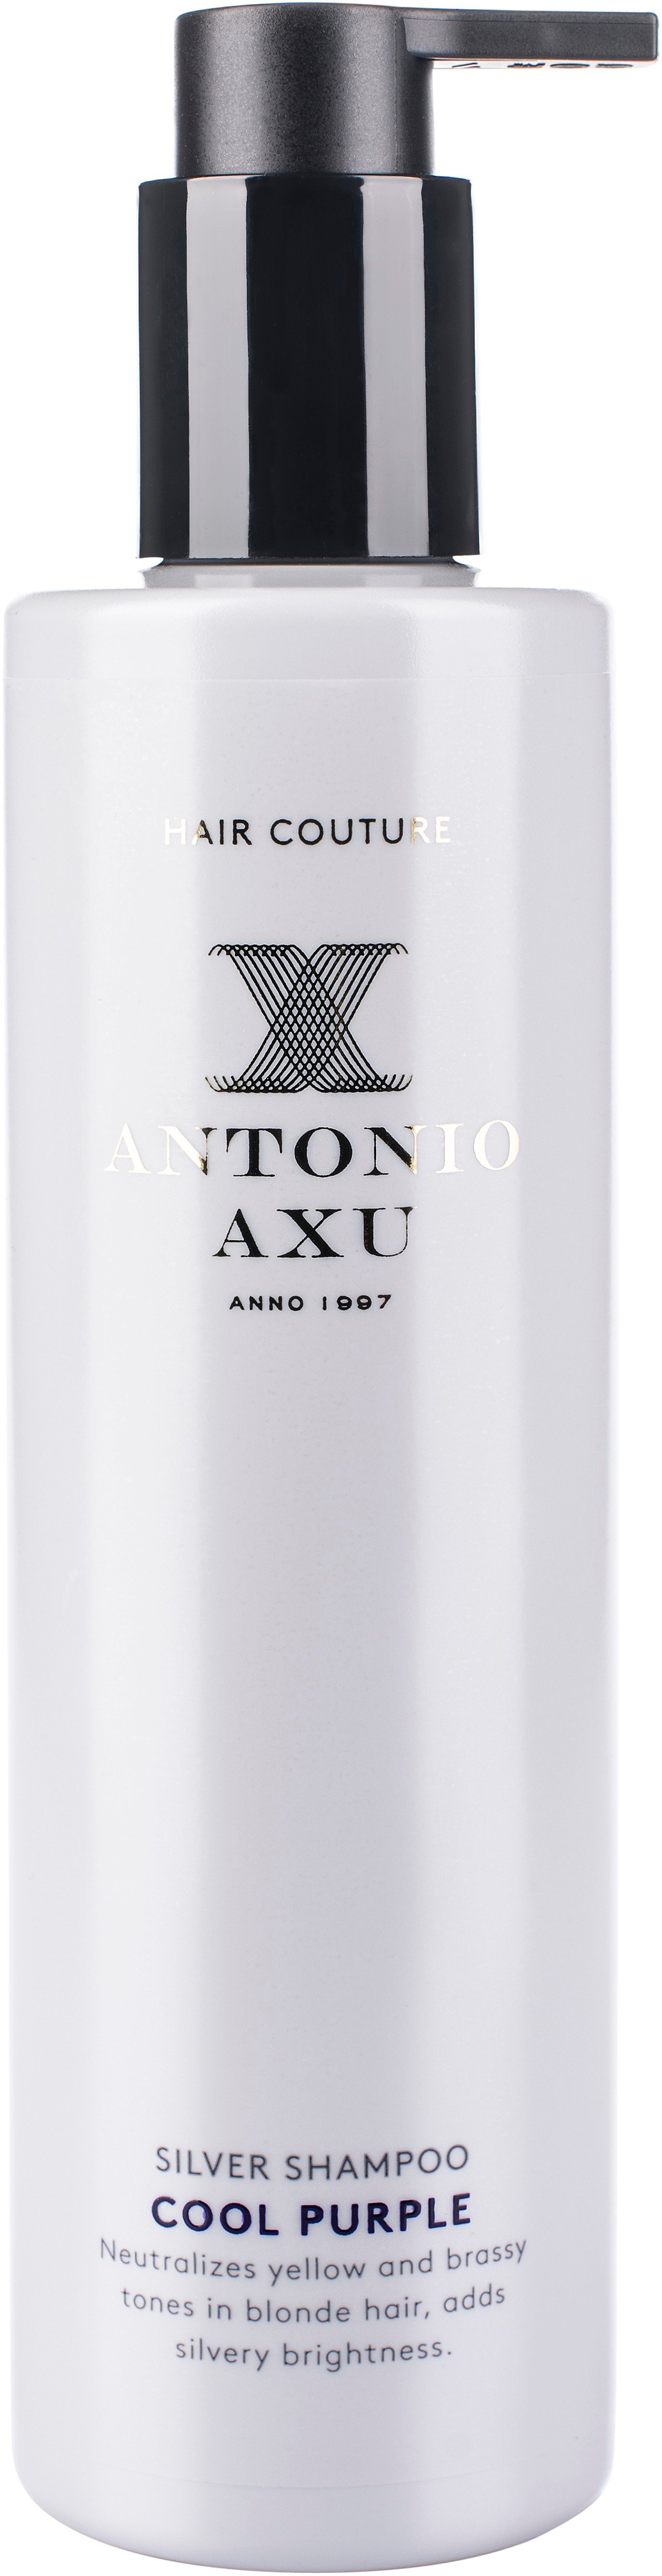 Antonio Axu Silver Shampoo Cool Purple 300 ml